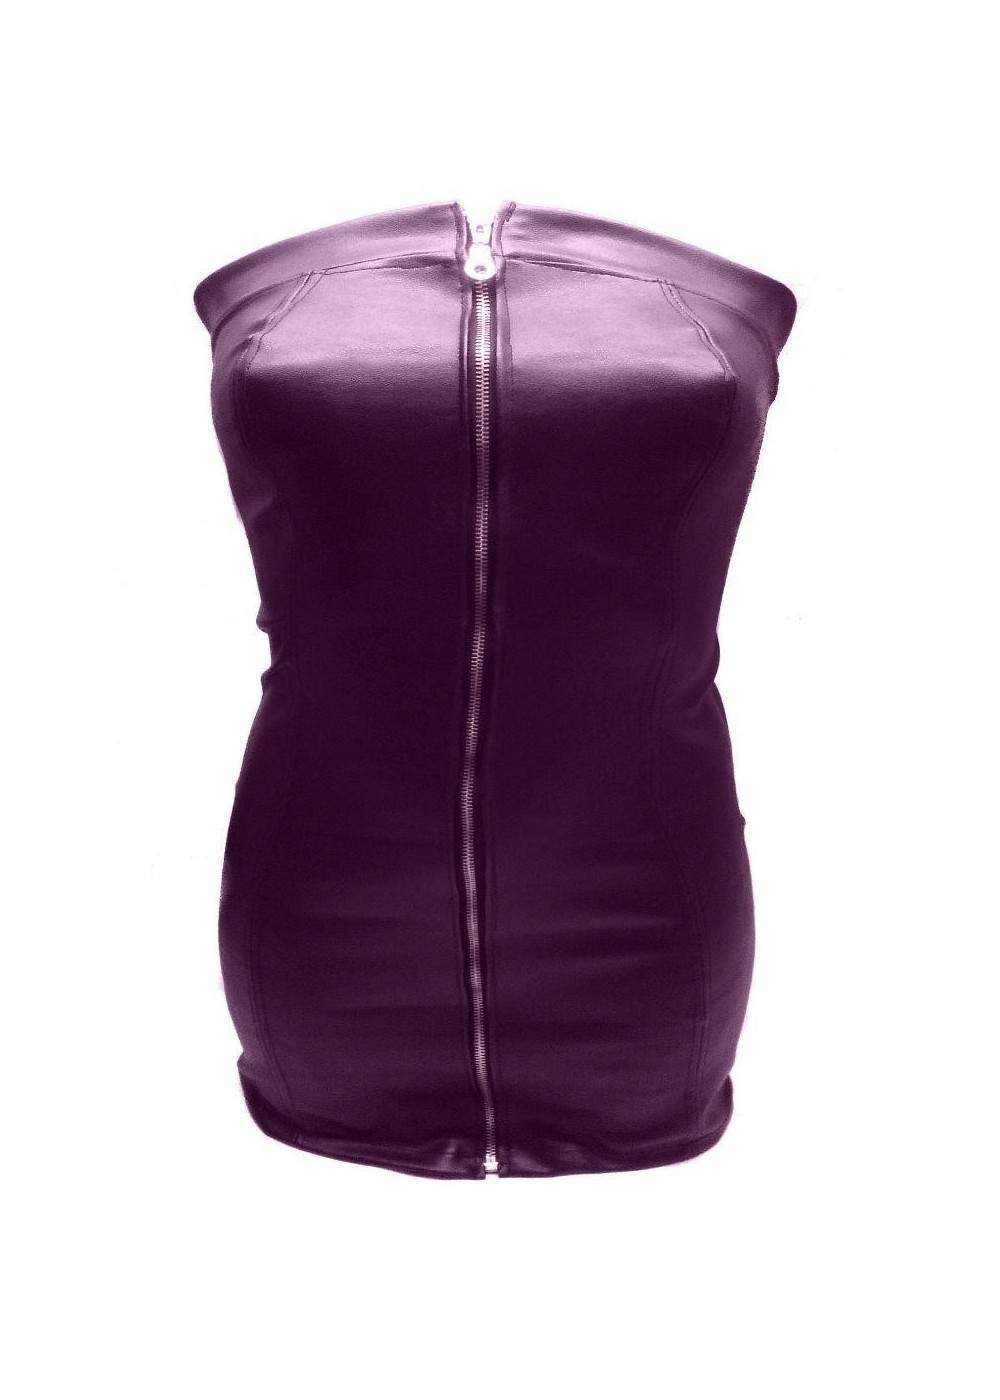 Designer leather dress purple size L - XXL (44 - 52) 42,35 € - 